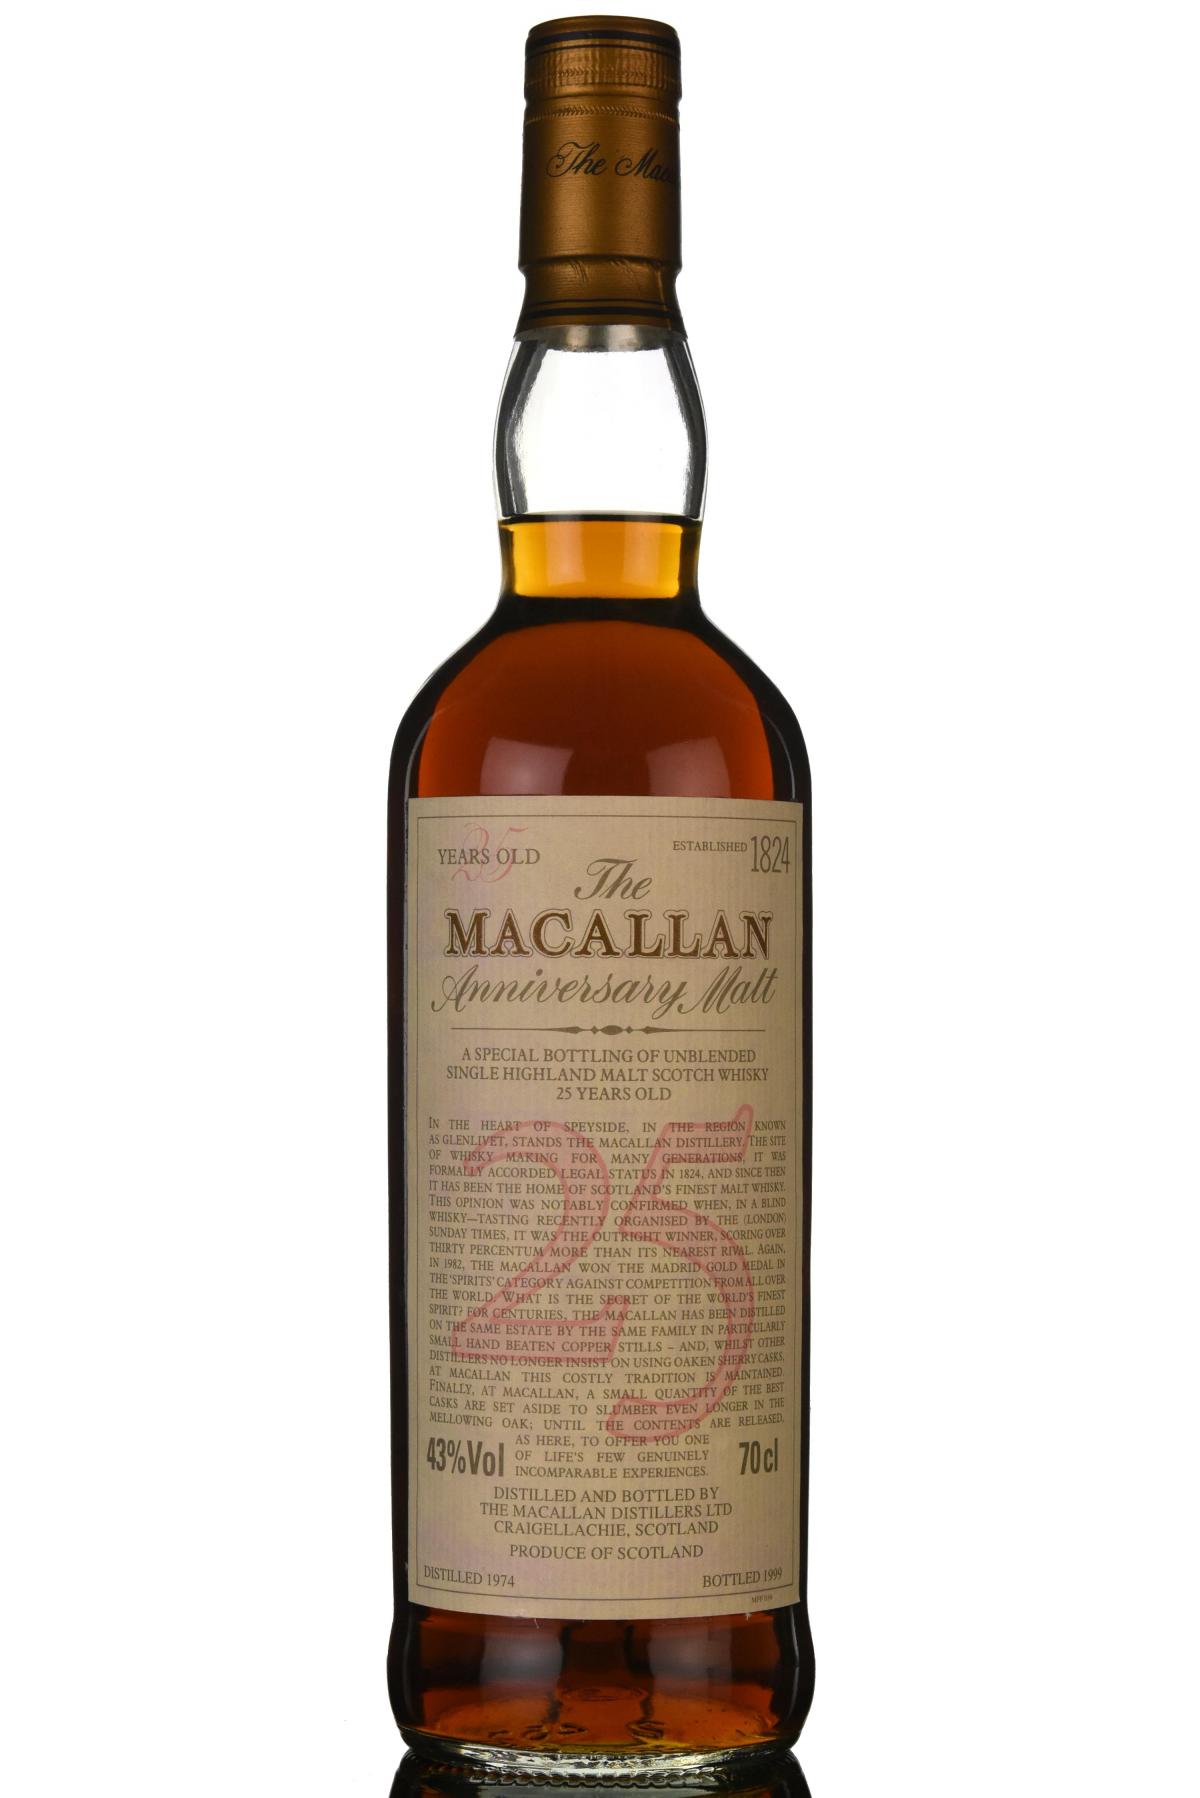 Macallan 1974-1999 - 25 Year Old - Anniversary Malt